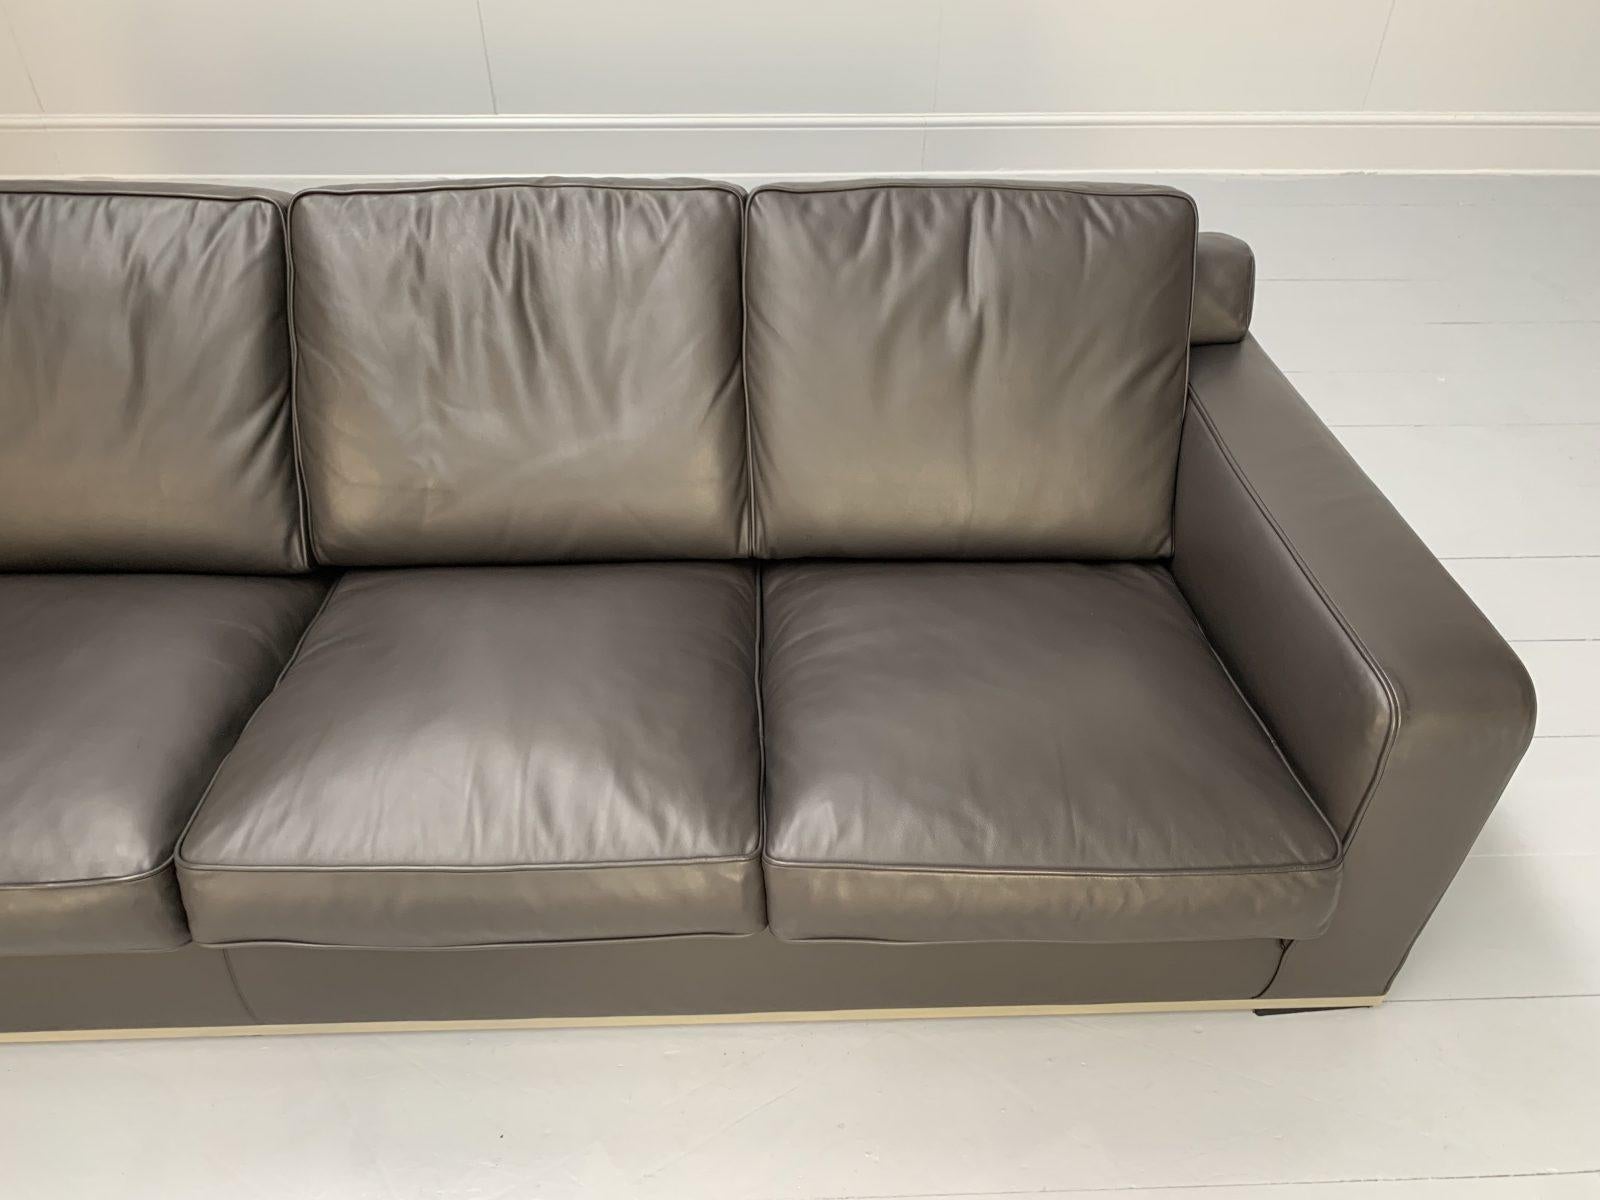 B&B Italia “Imprimateur Apta” 4-Seat Sofa in Dark Grey “Gamma” Leather For Sale 3